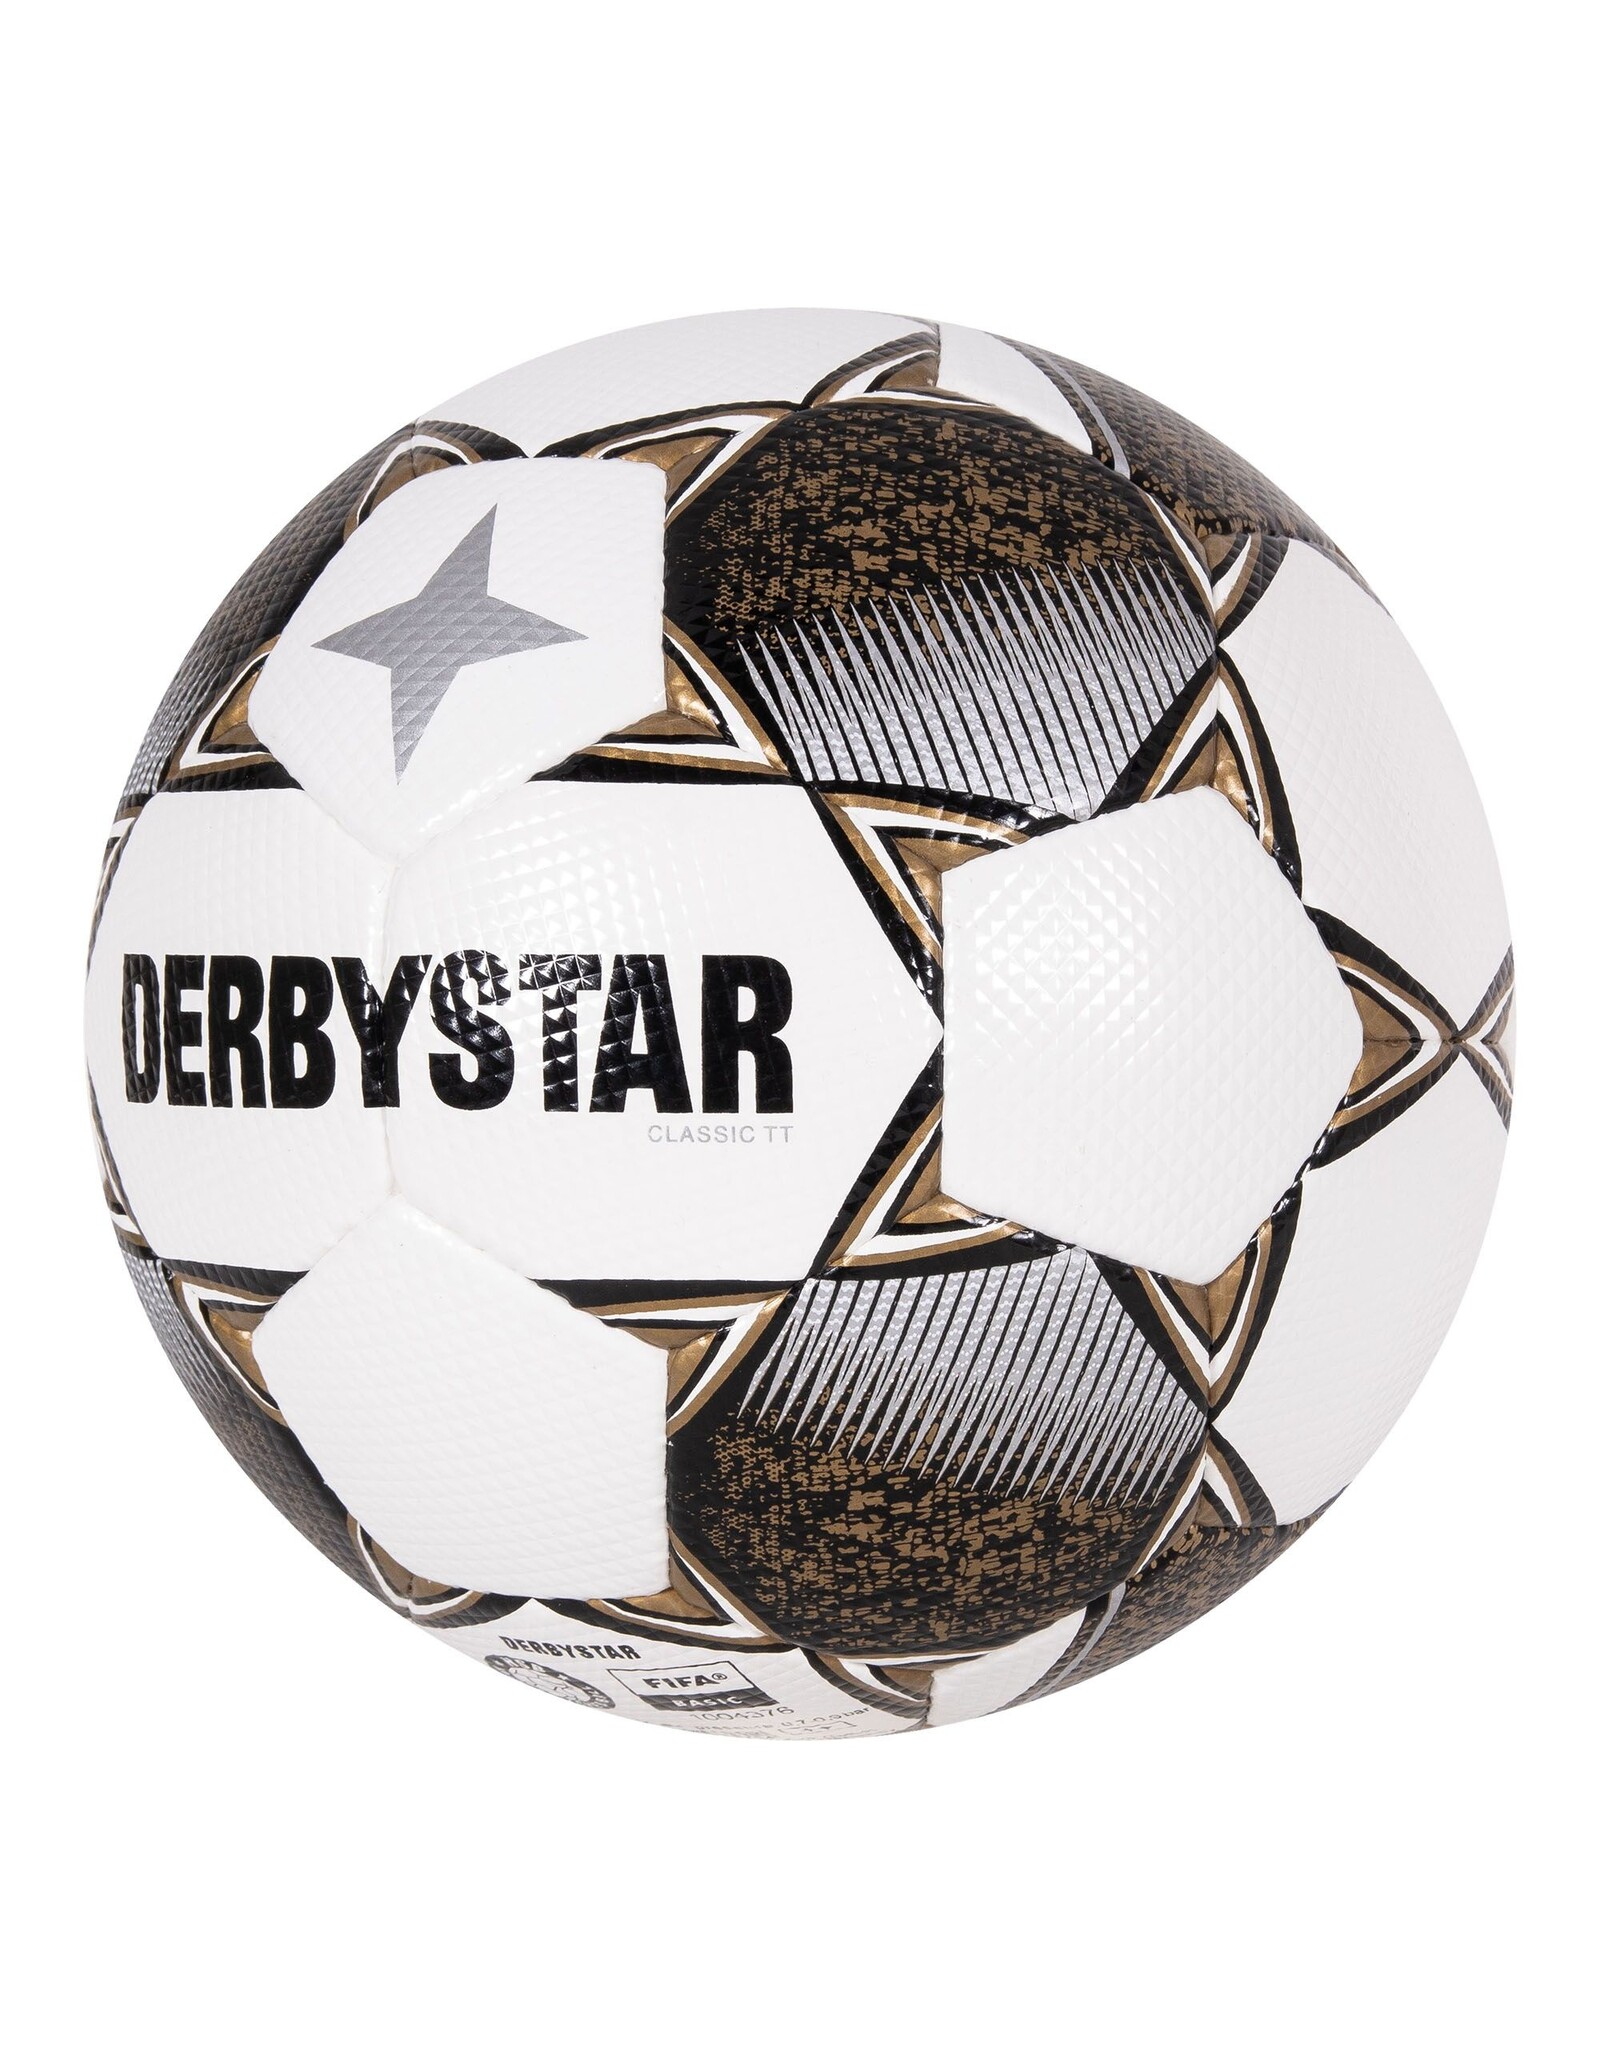 Derbystar Classic TT II-White-Gold